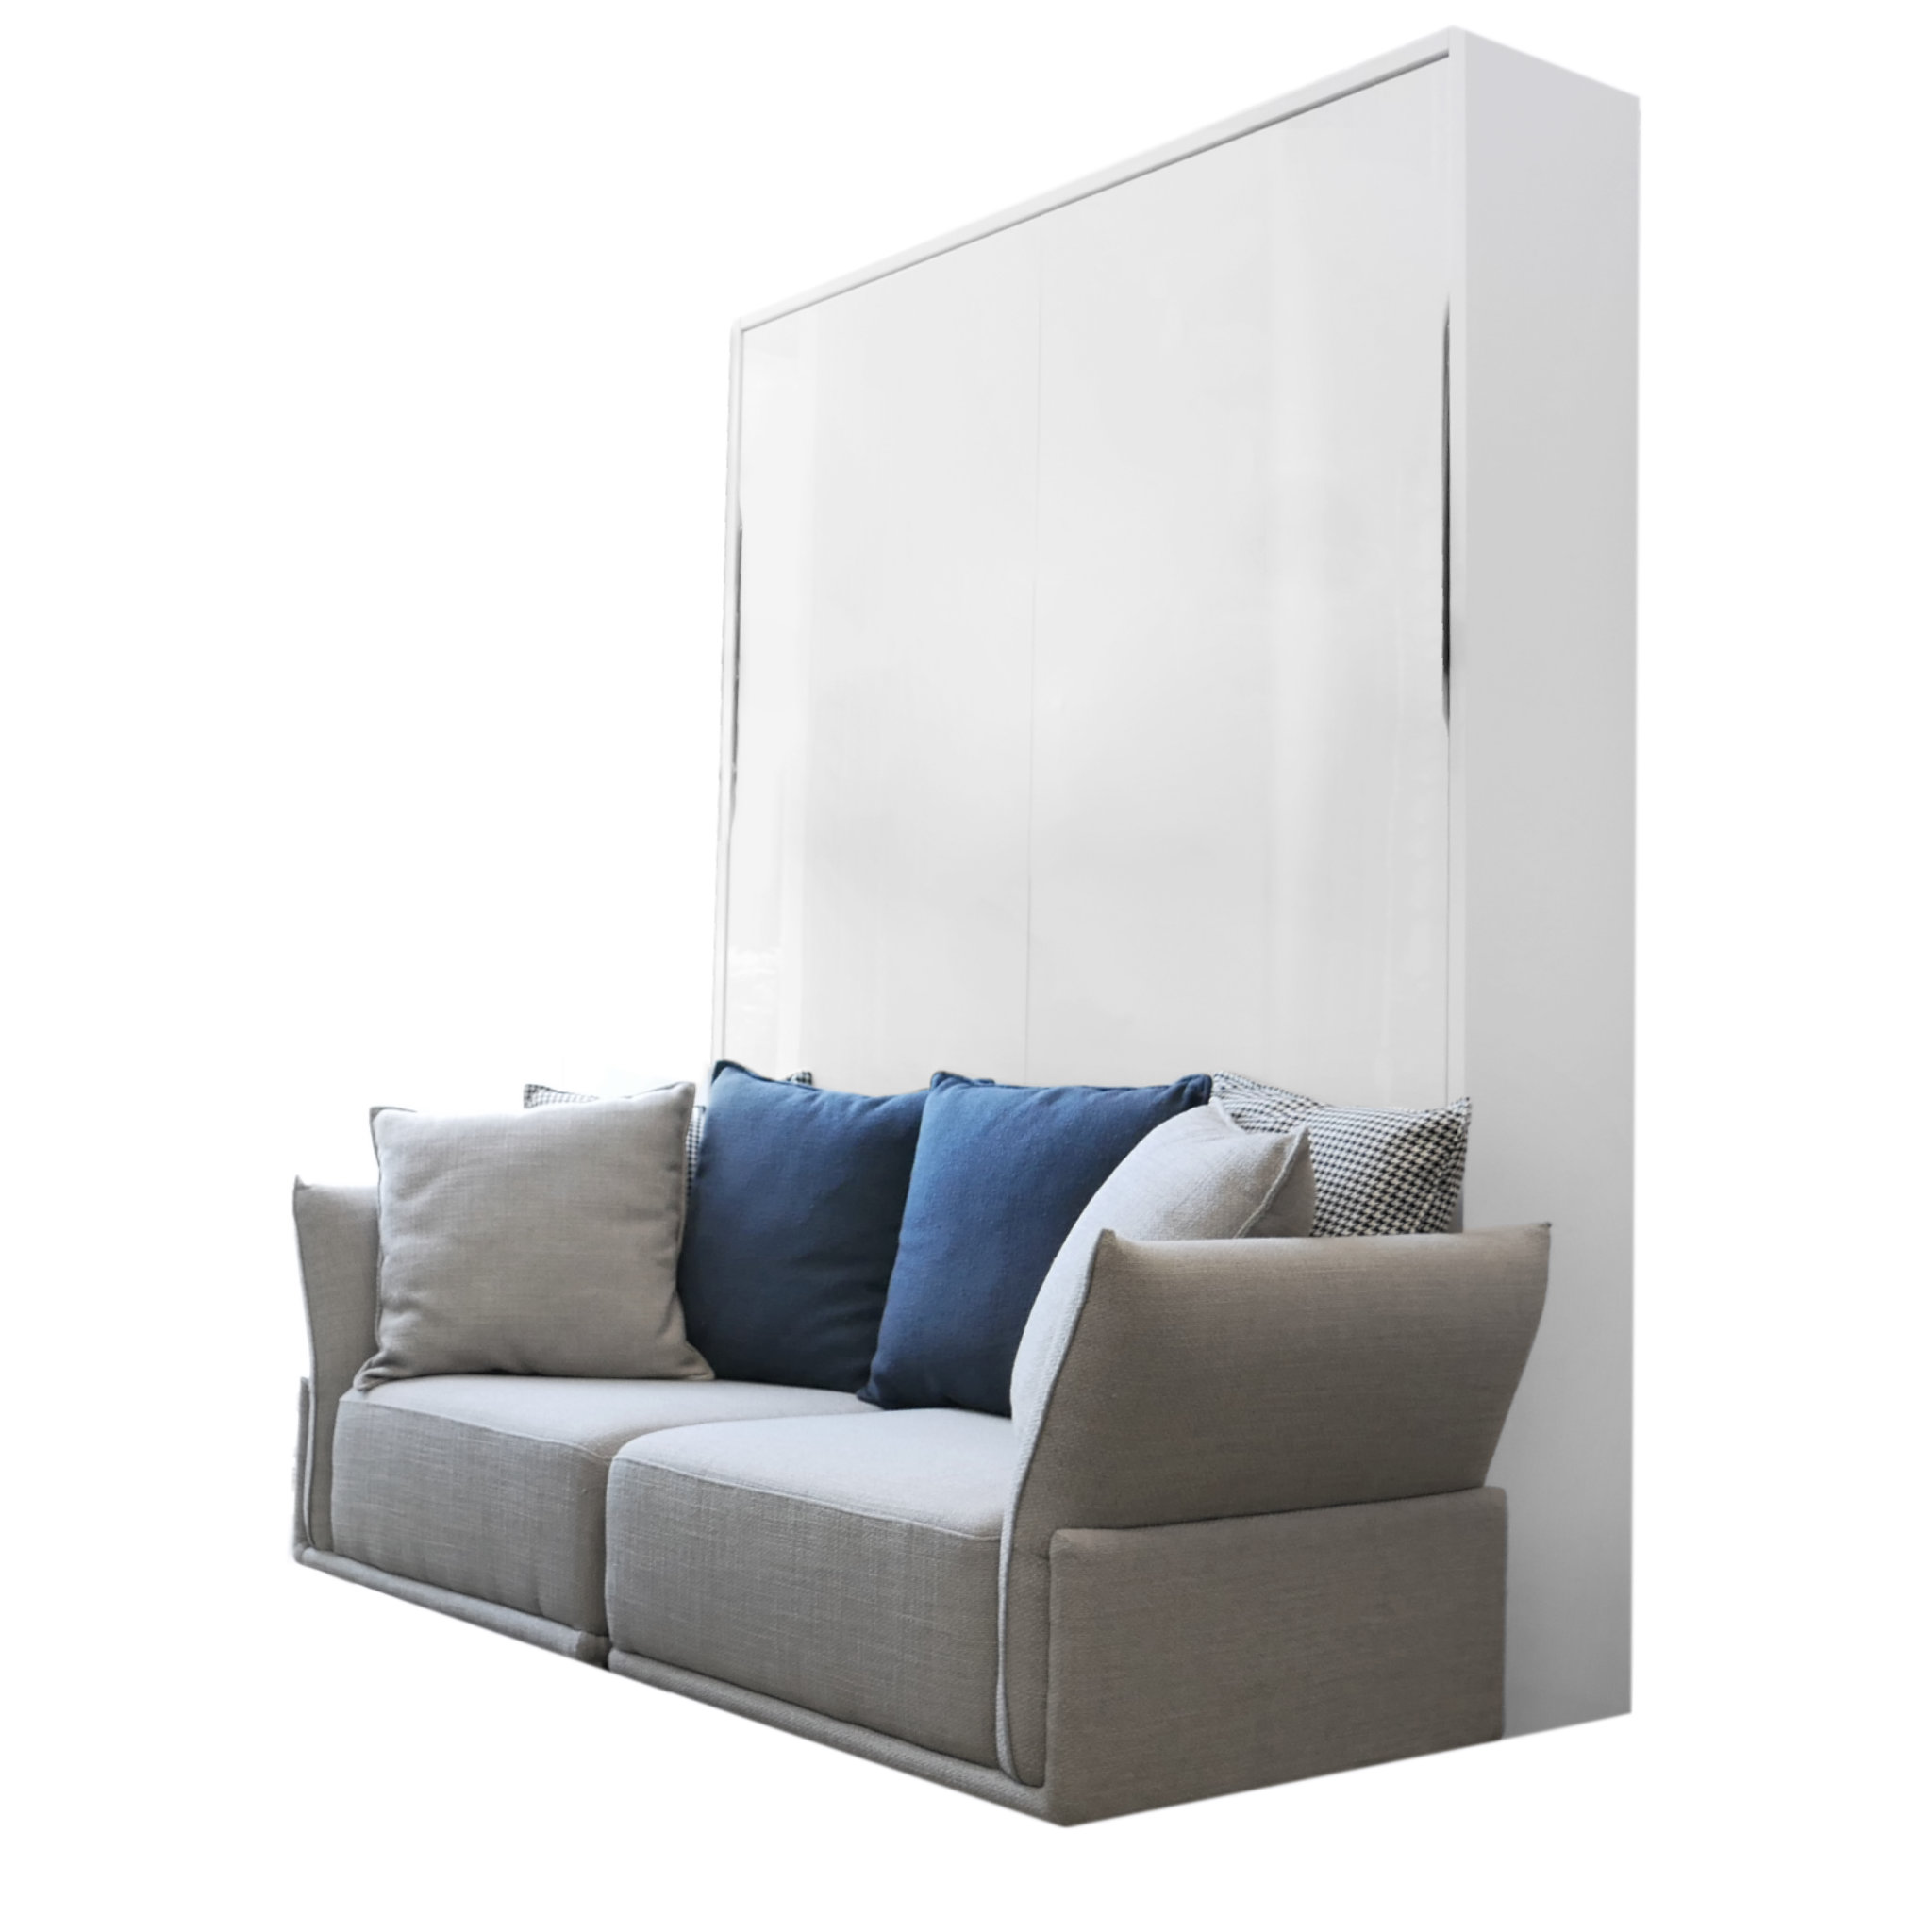 Reorganiseren Latijns Afkorten MurphySofa Stratus: Queen 2 seat sofa wall bed - Expand Furniture - Folding  Tables, Smarter Wall Beds, Space Savers